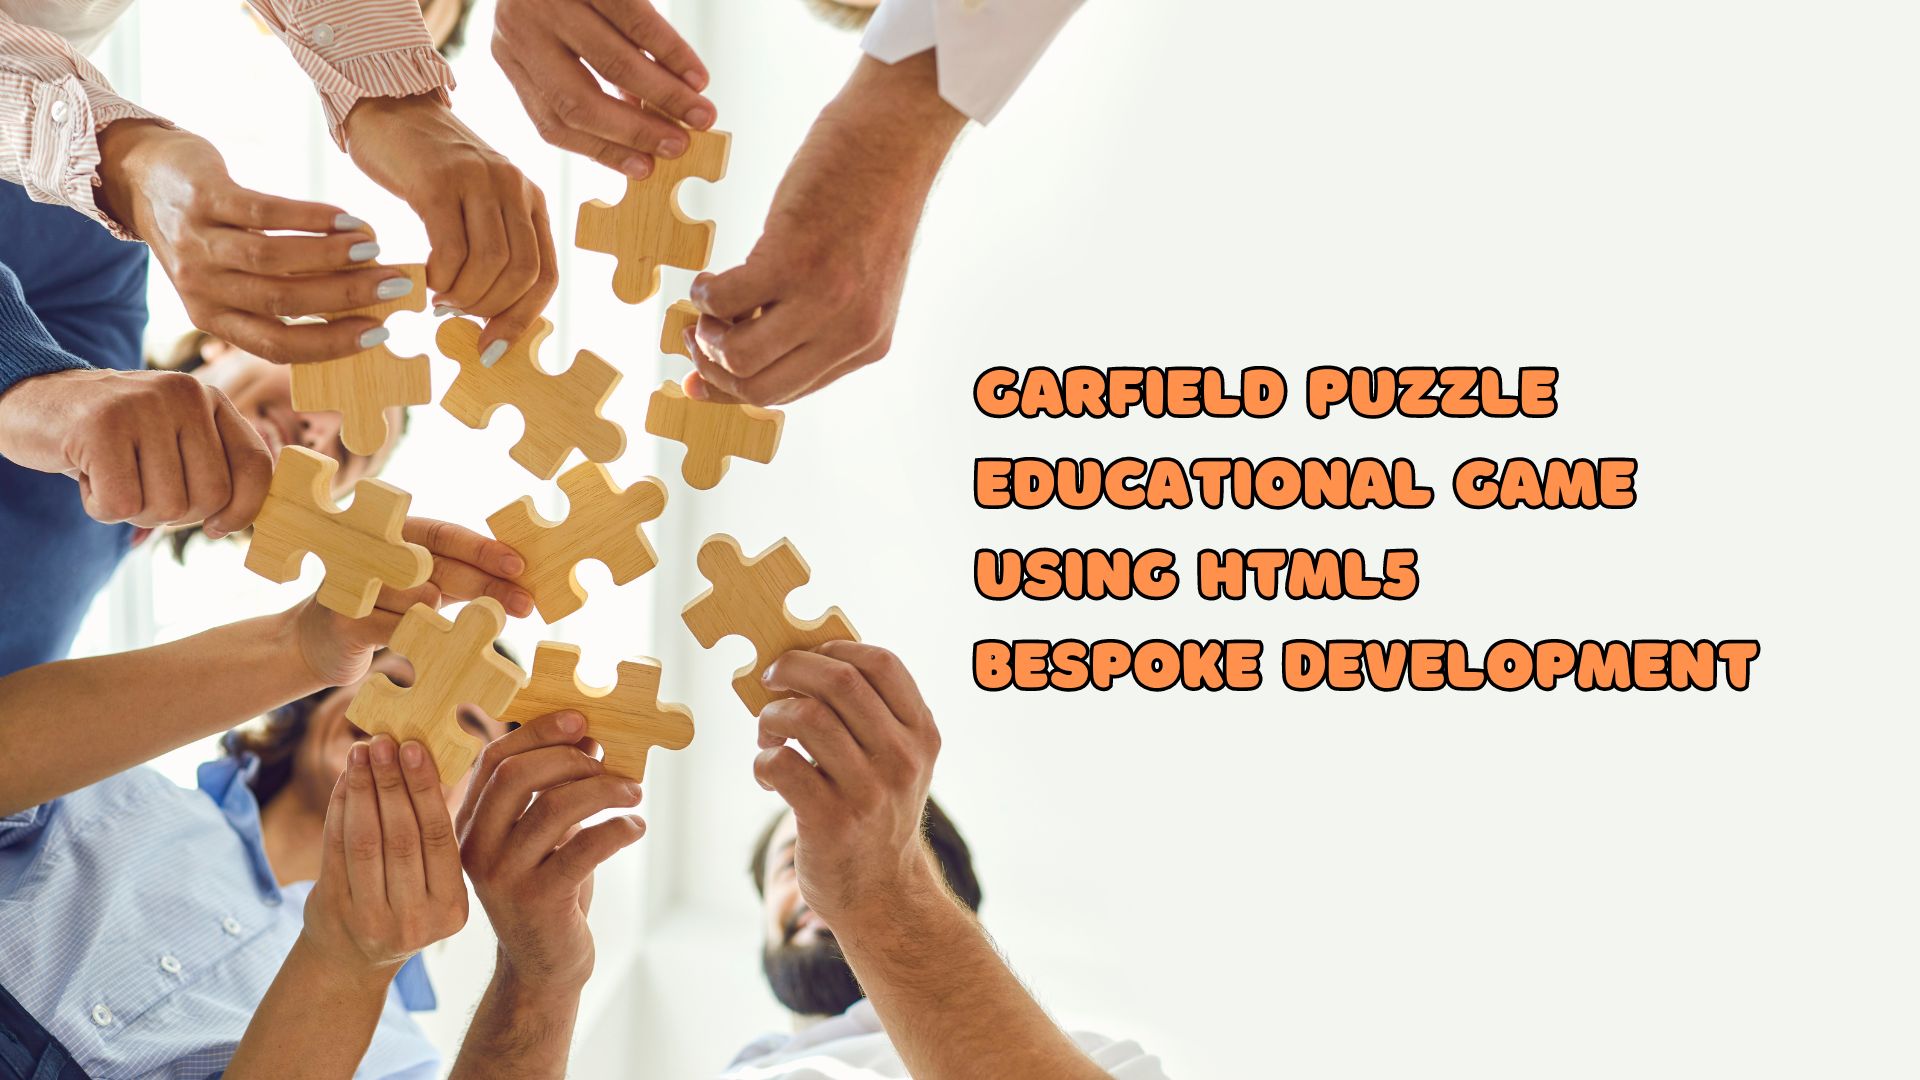 Garfield Puzzle - Educational Game Using HTML5 Bespoke Development